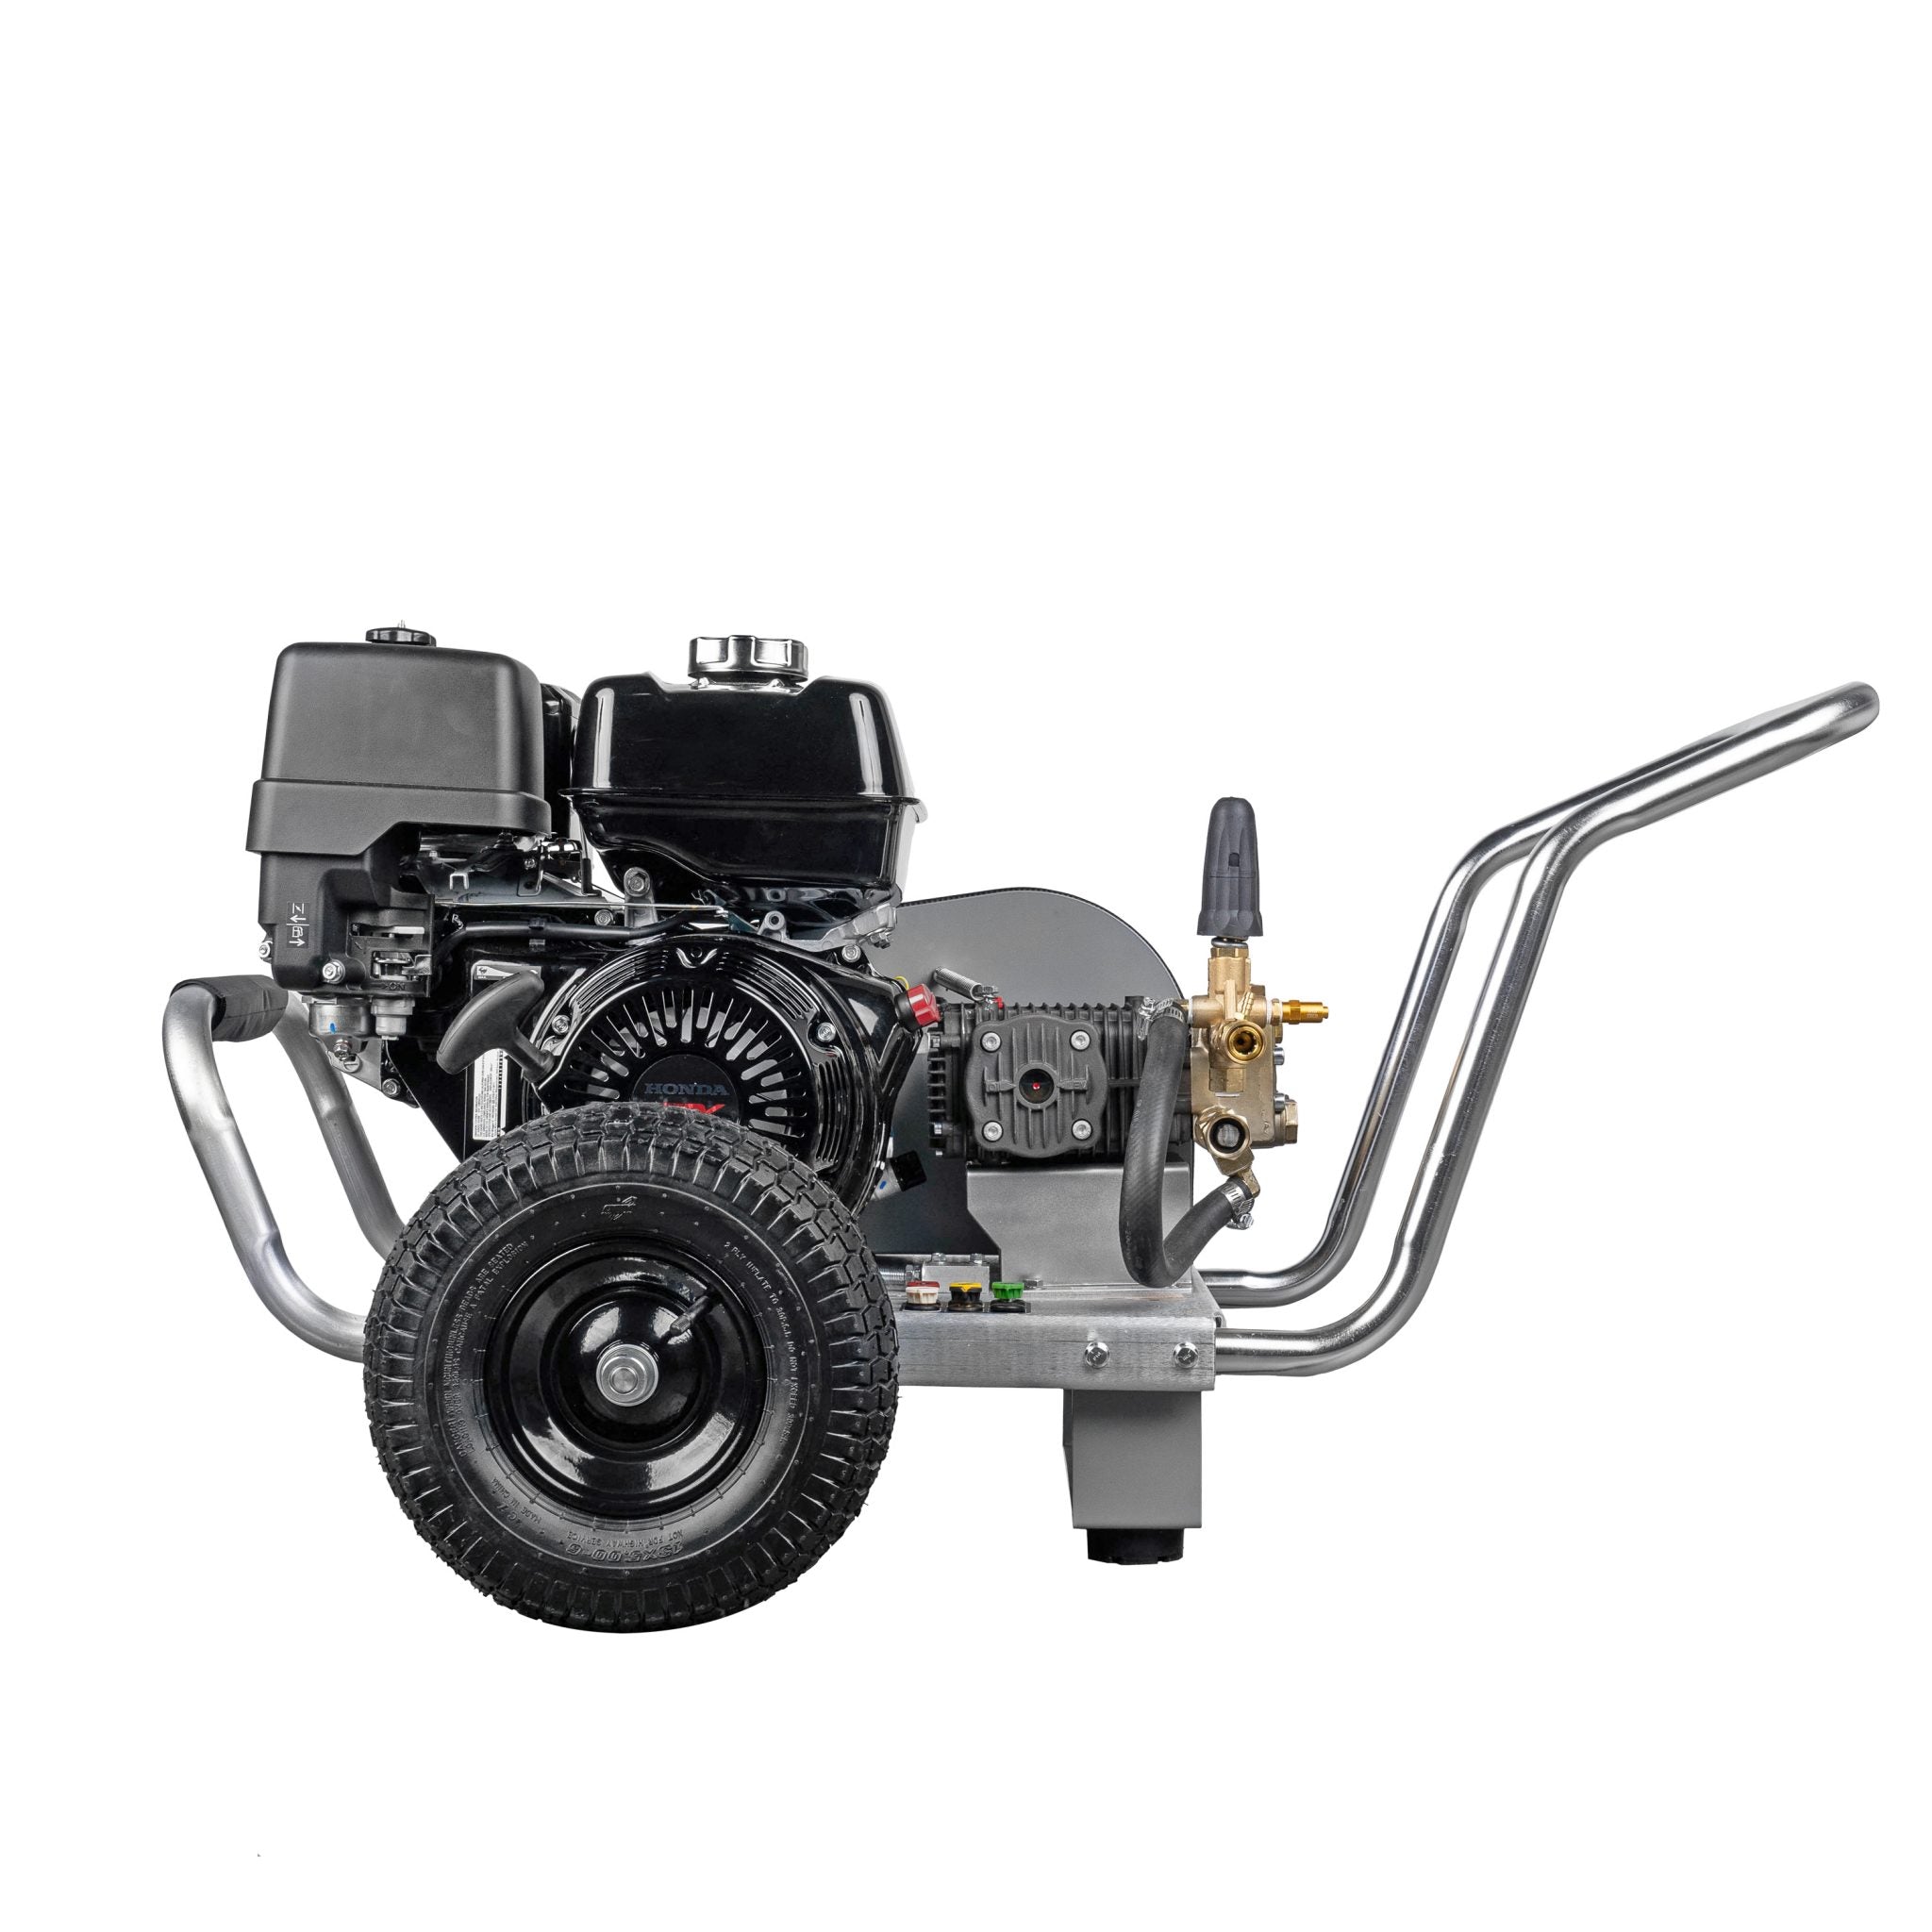 4200 PSI @ 4 GPM Belt Drive Honda GX390 Gas Pressure Washer w/ Comet Pump